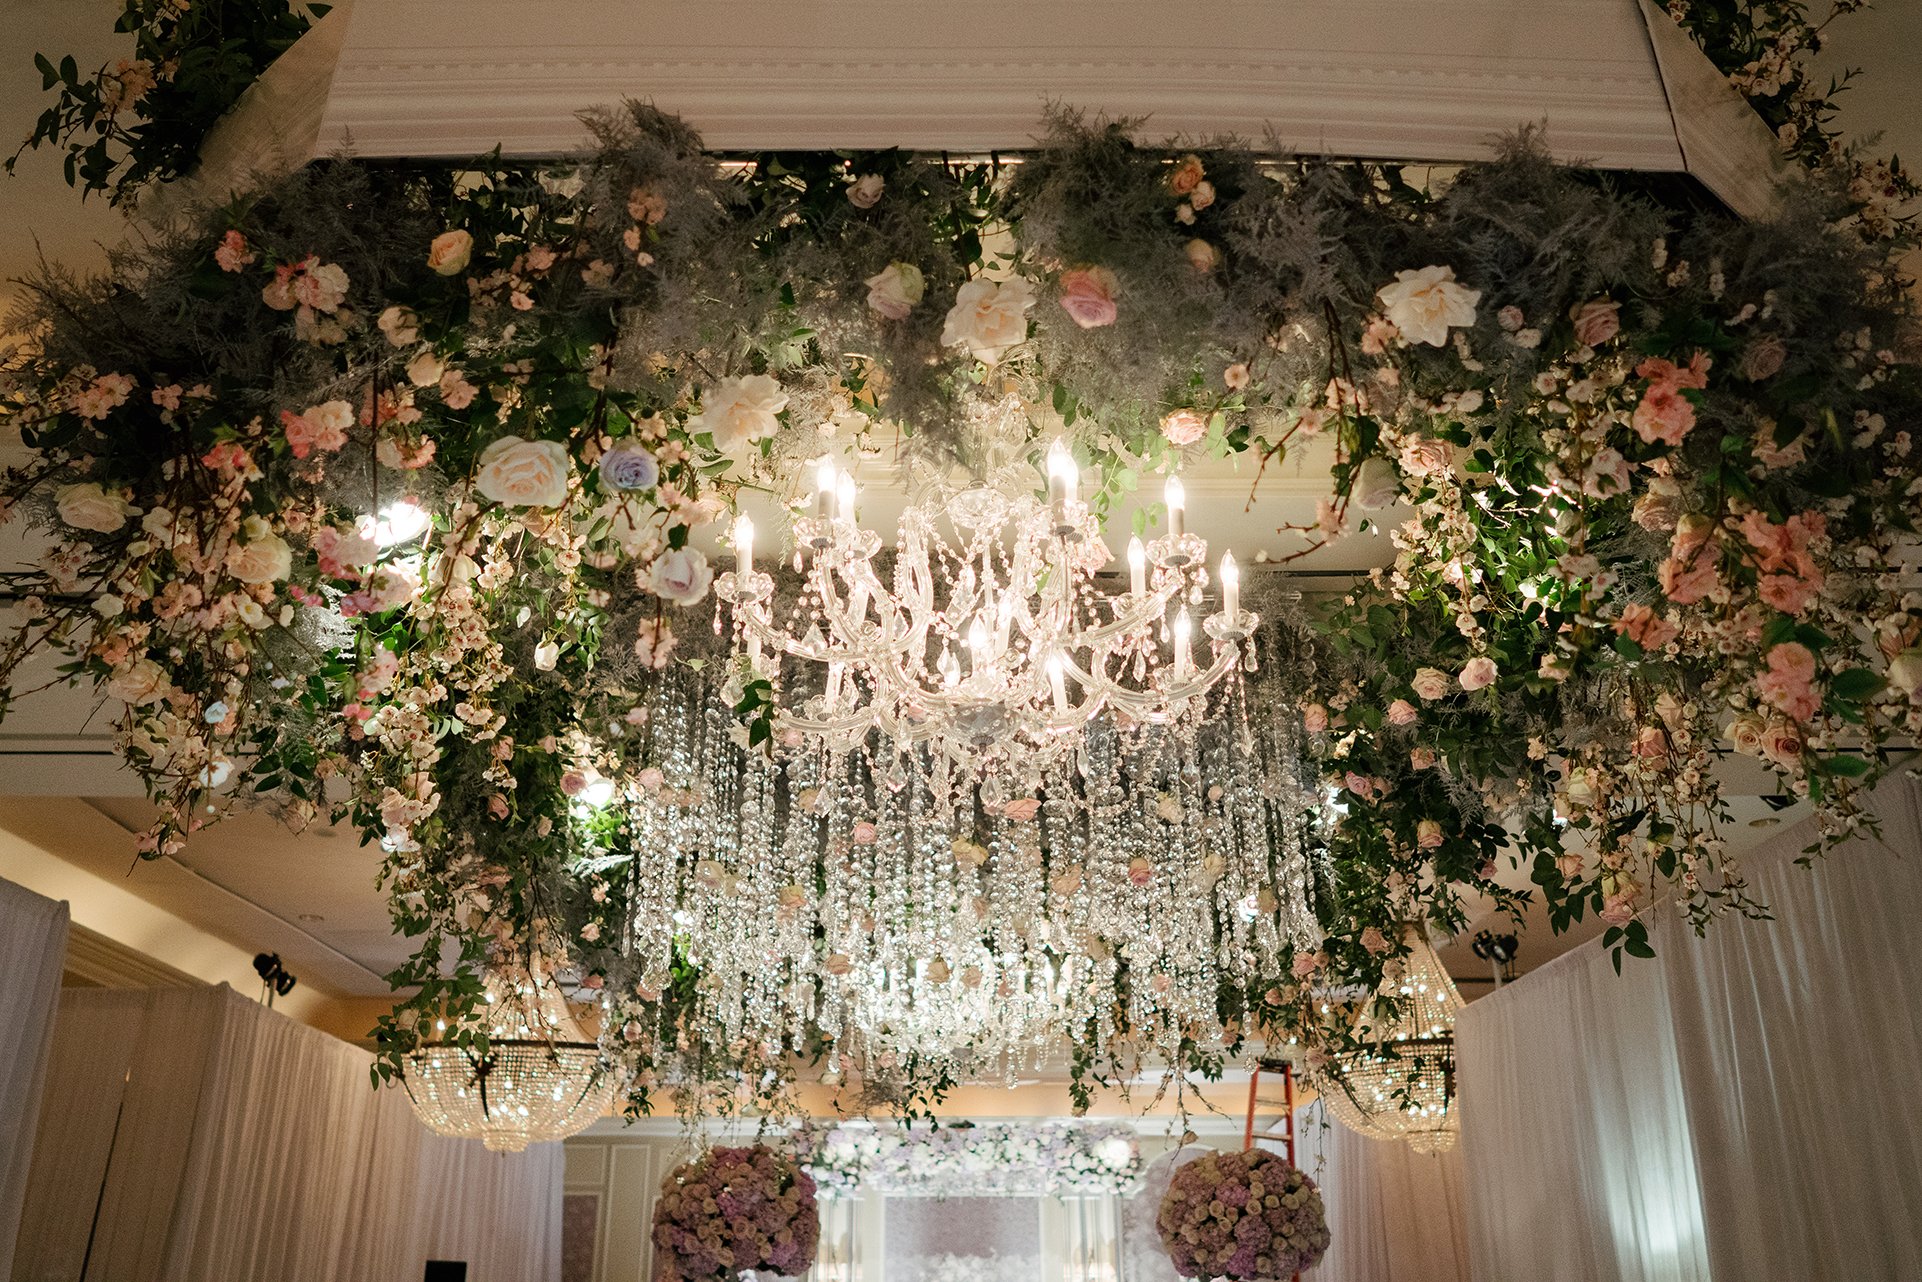 Wedding Decor, Floral Ceiling Treatment, Todd Events, Hotel Wedding, Houstonian Hotel, Chandelier